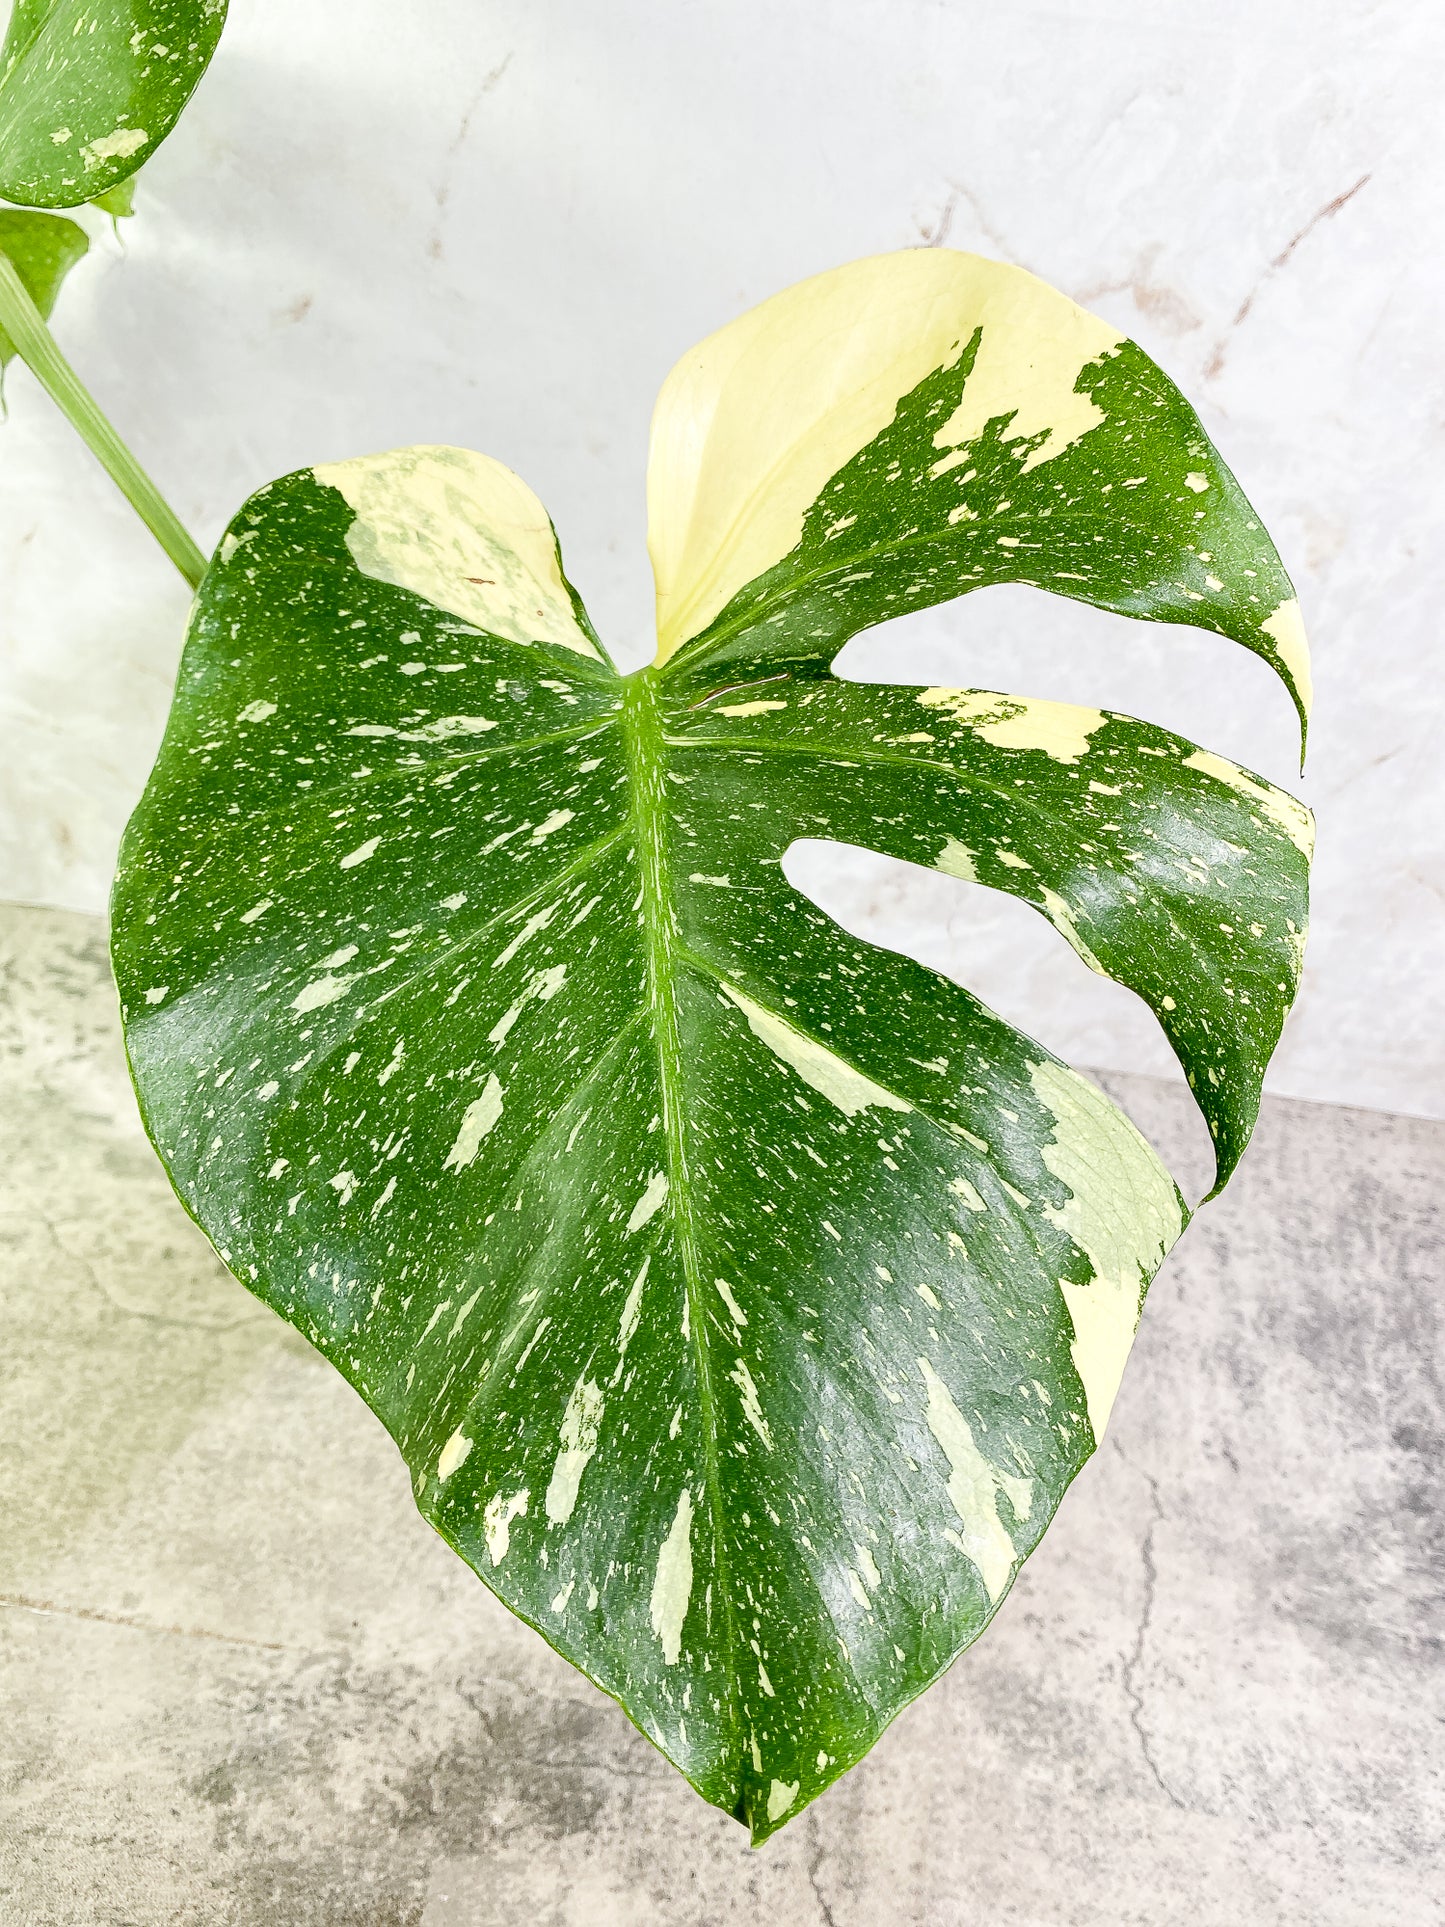 Monstera Thai Constellation 2 leaves & 1 unfurling leaf Slightly Rooted